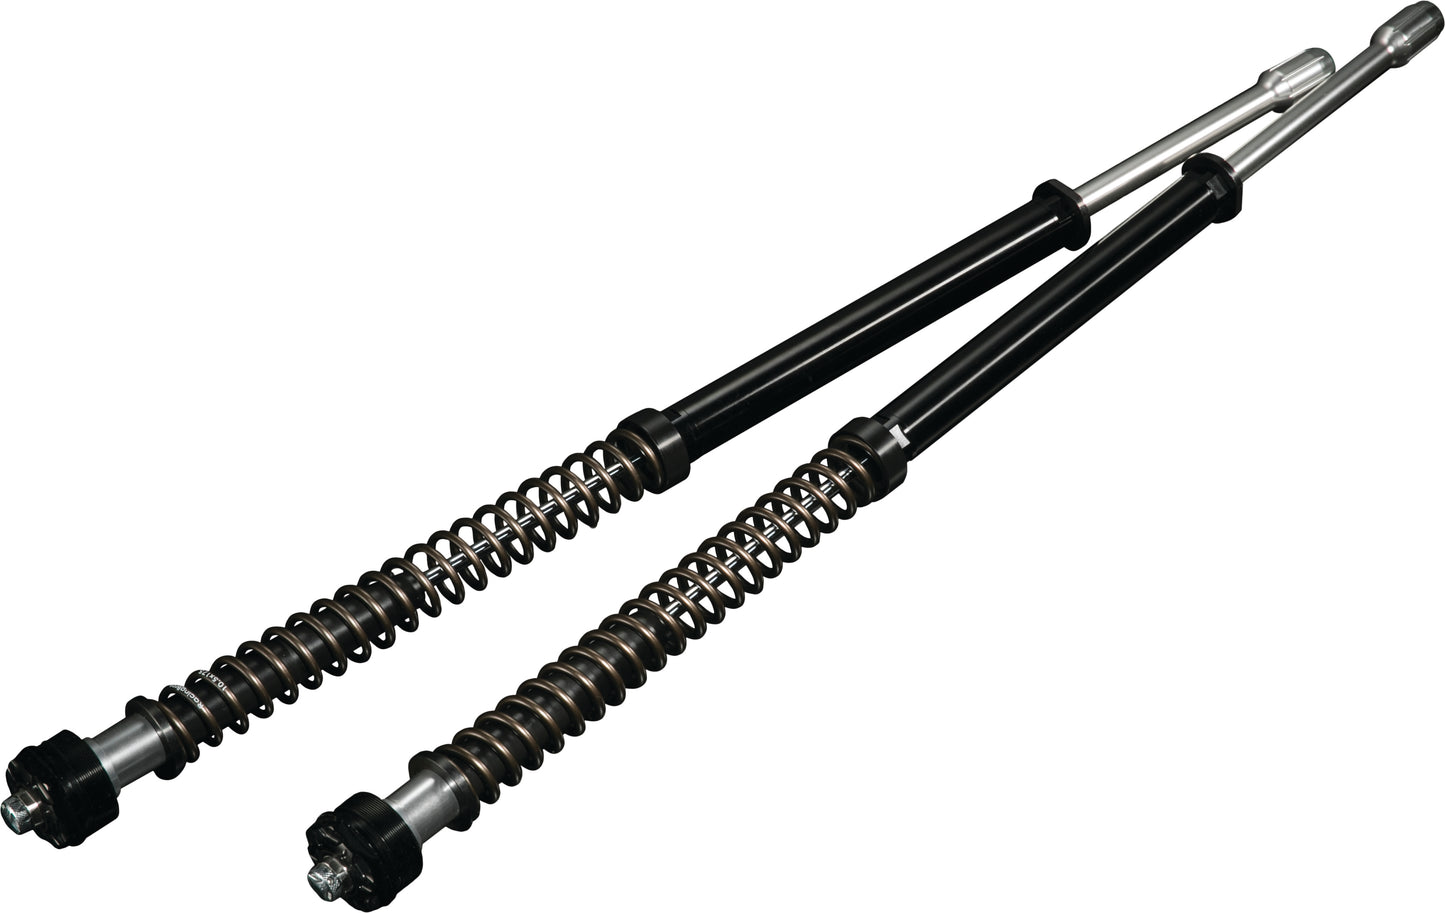 Scepter Fork Kit Hvy 39mm Xl883n 11 15 Xl883l 91 15